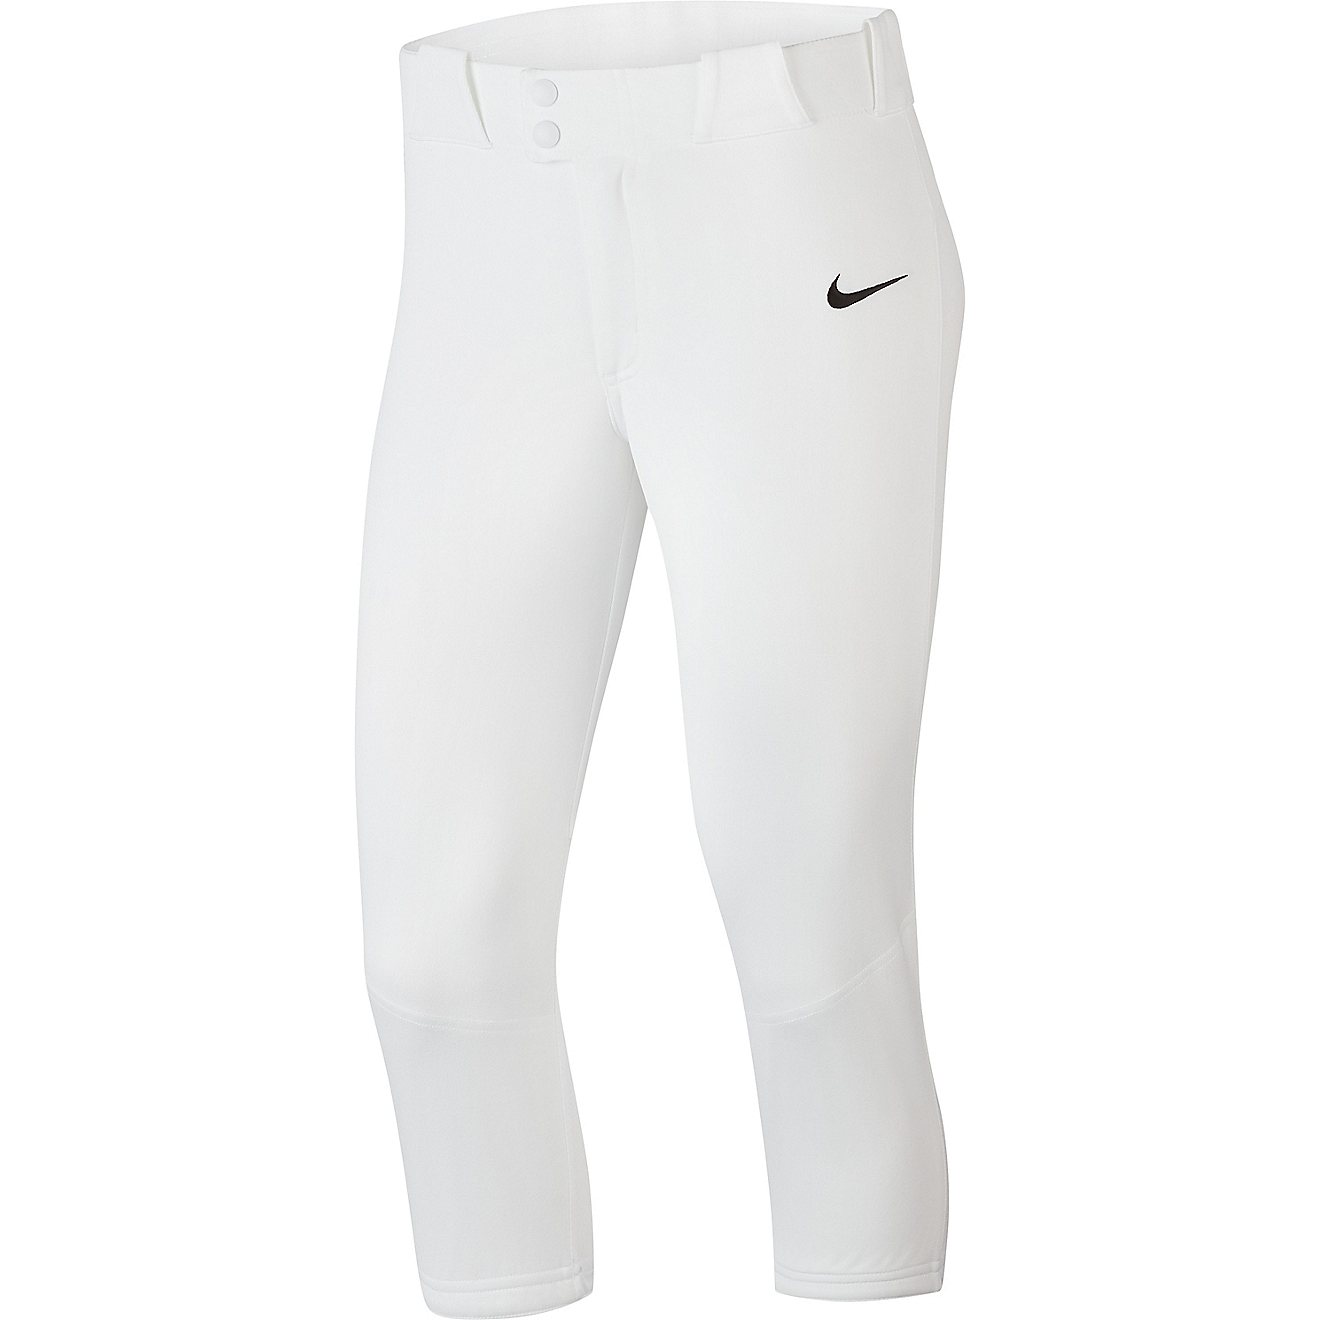 Nike Women's Vapor Select Softball Pants | Academy